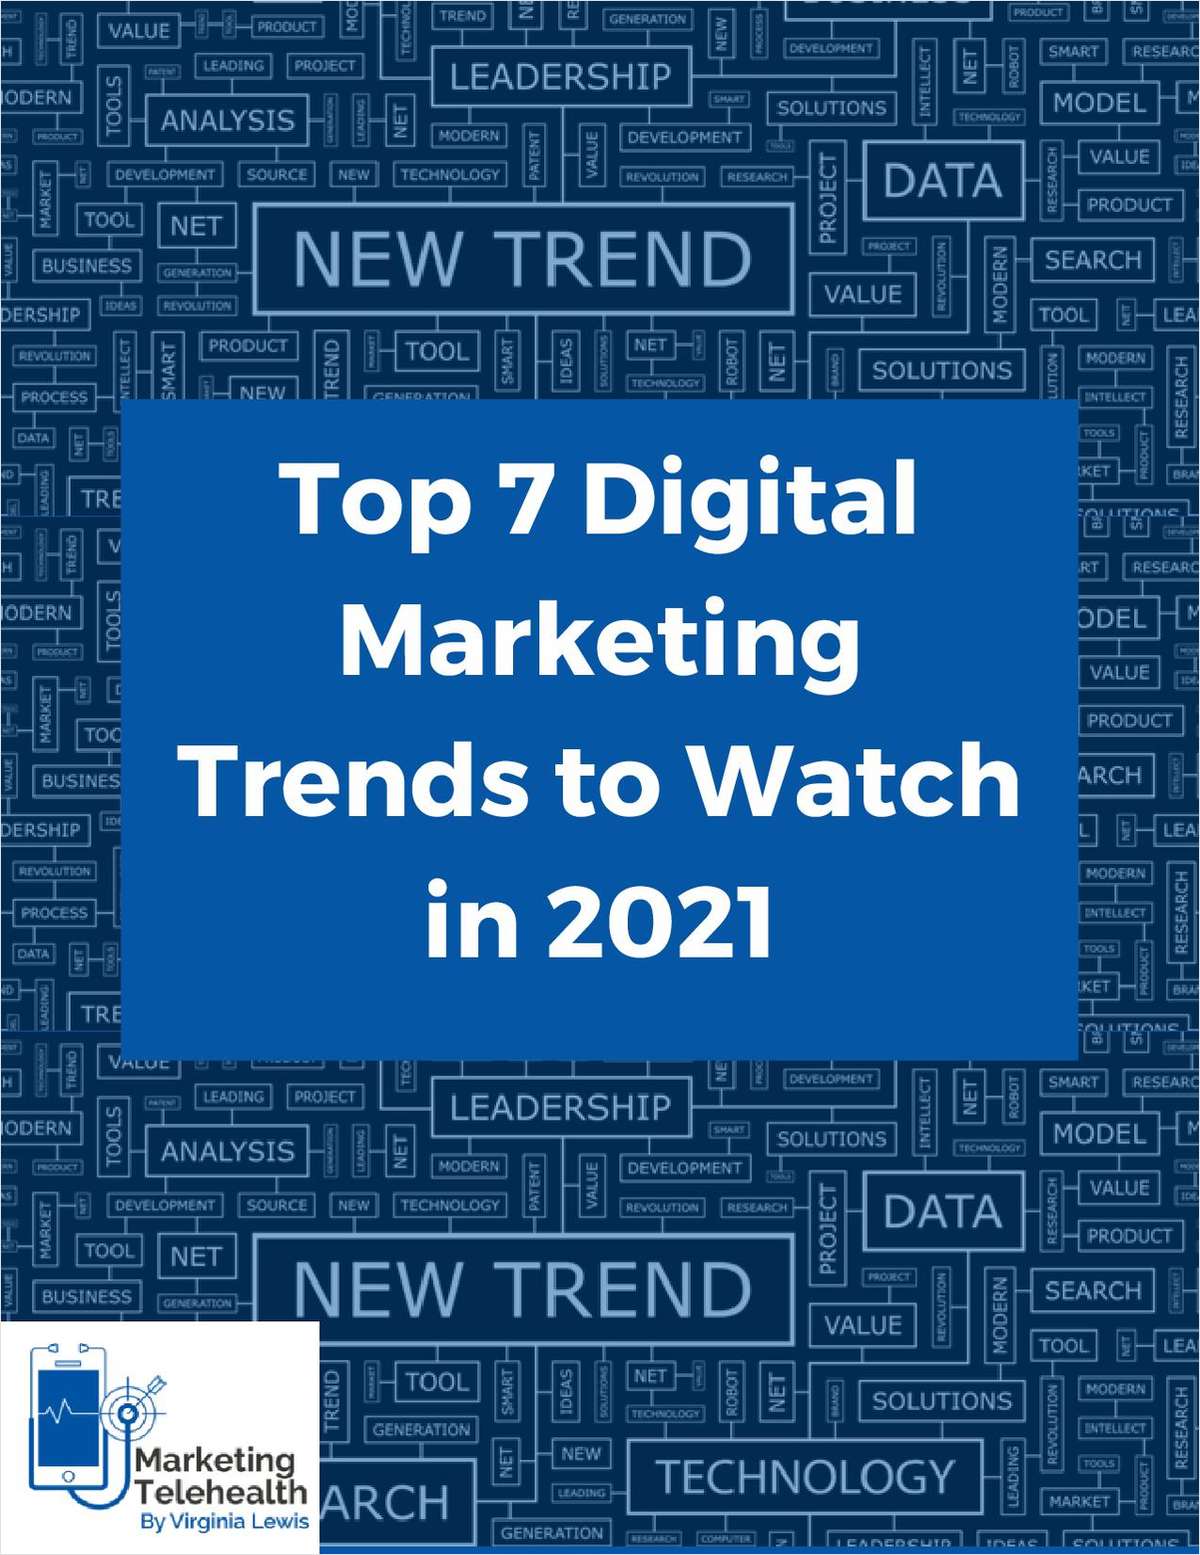 Top 7 Digital Marketing Trends to Watch in 2021